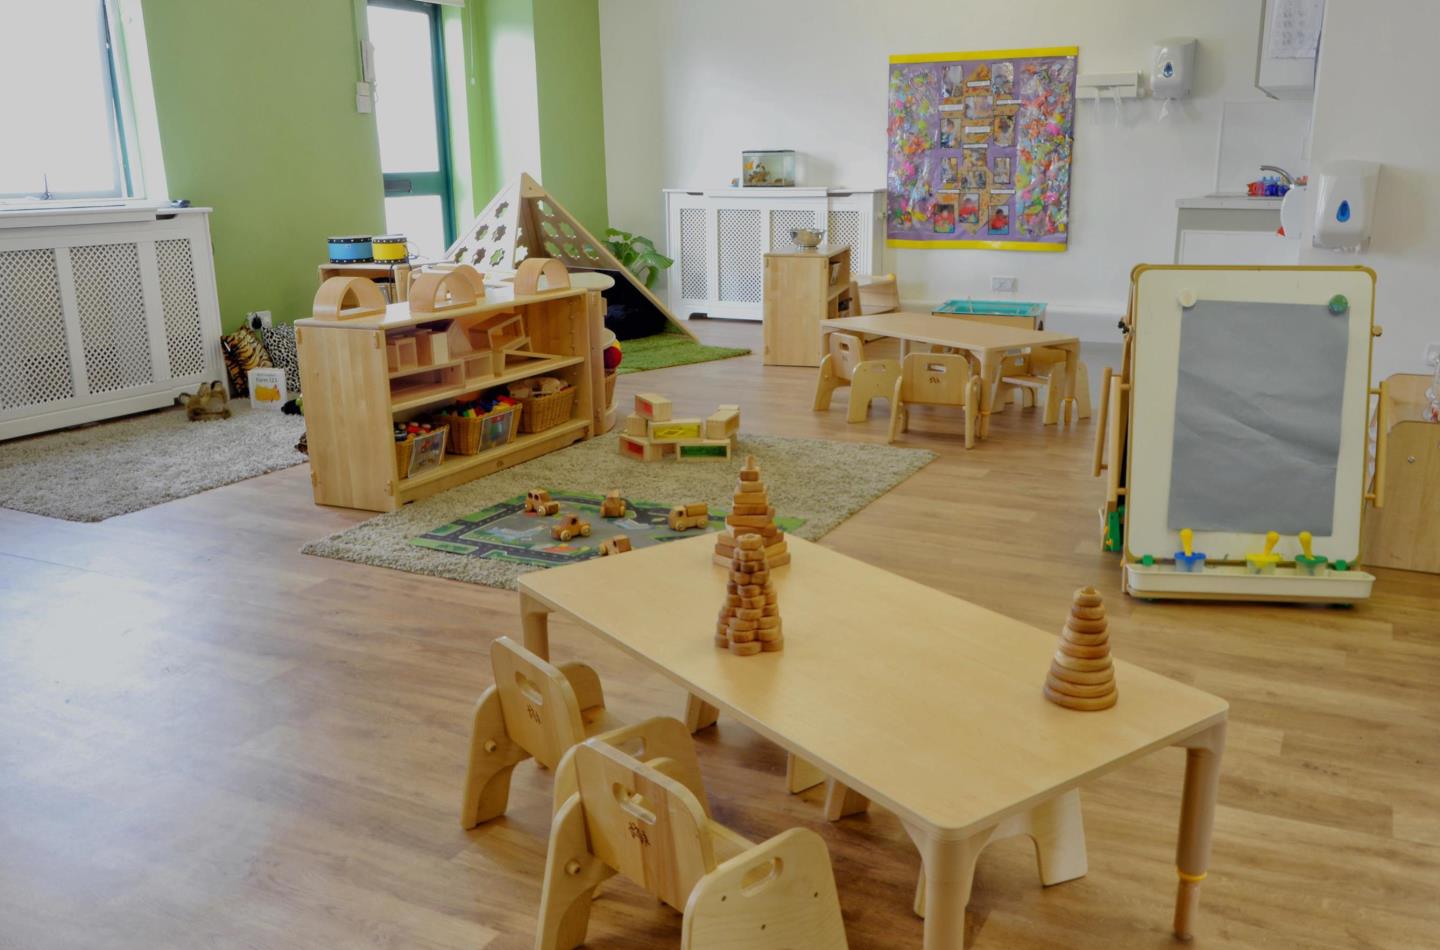 Bright Horizons Leeds Day Nursery and Preschool Leeds 03300 576324